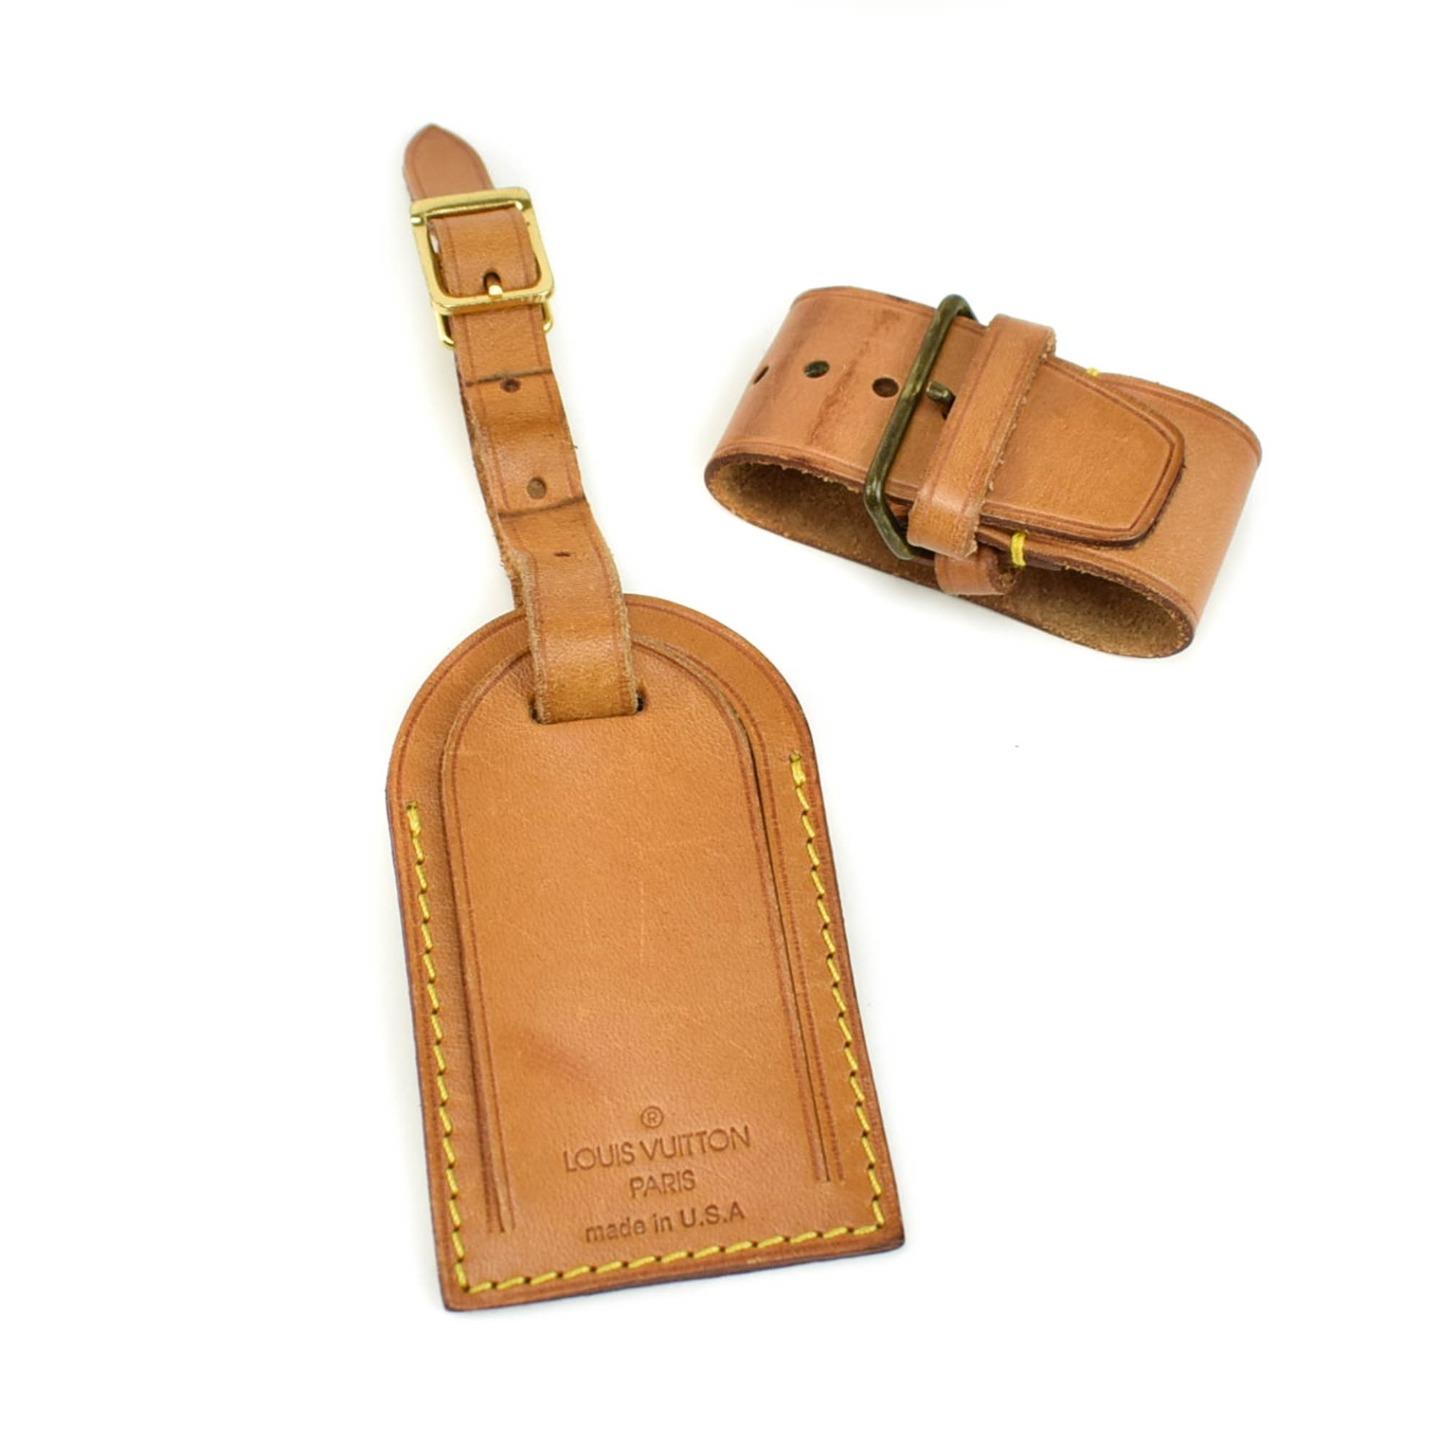 LOUIS VUITTON: Tan, Vachetta Leather Logo Luggage Tag & Keepall Set (pv) | eBay